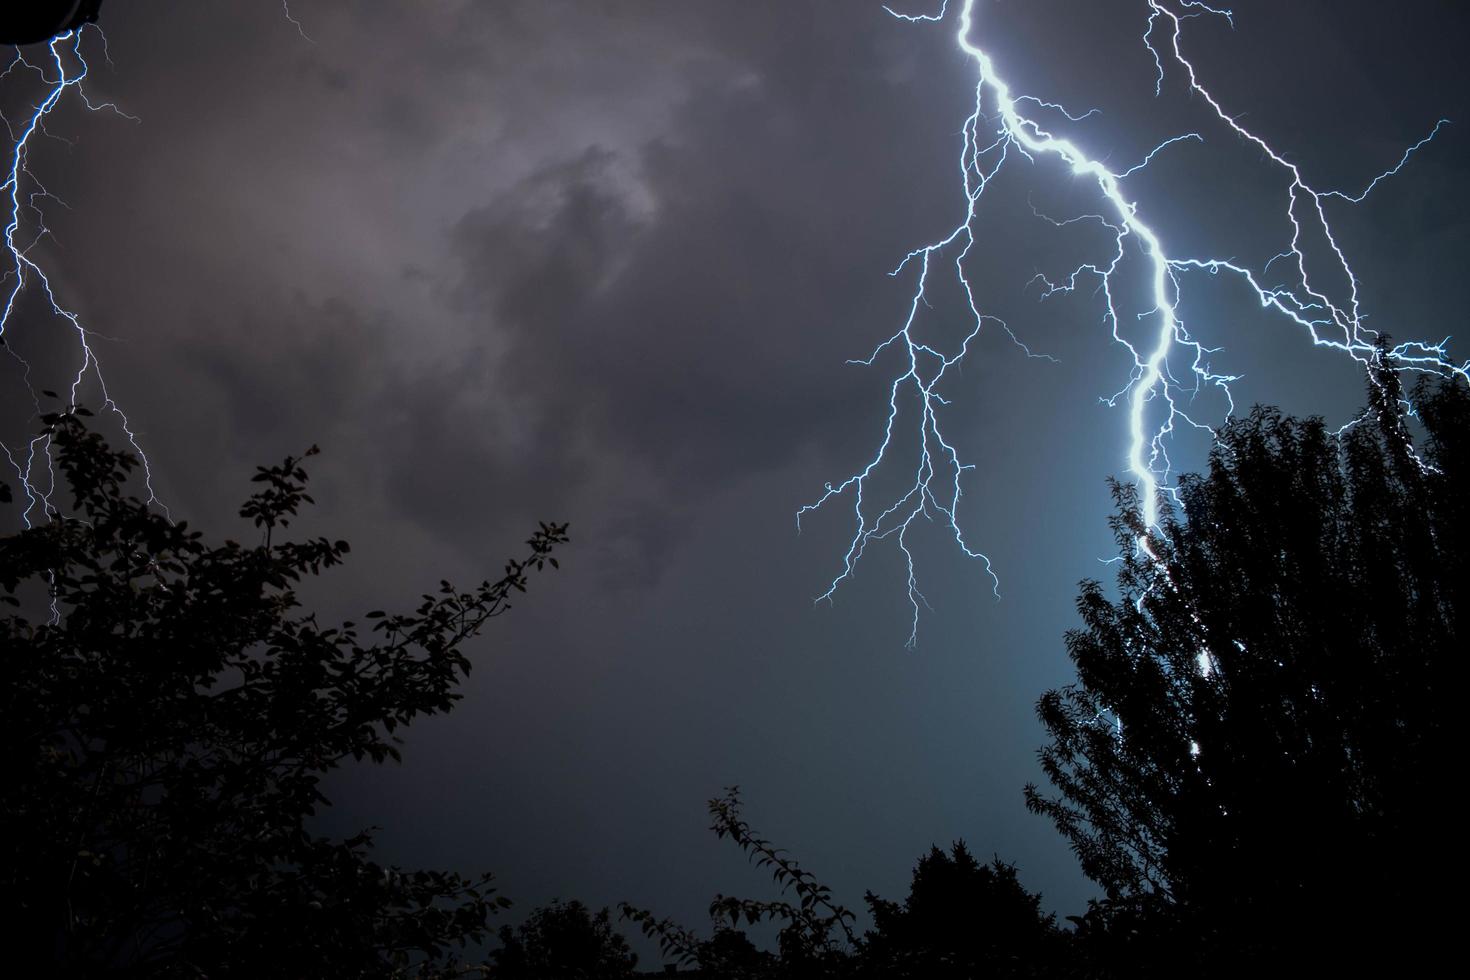 Lightning strike during a thunderstorm photo